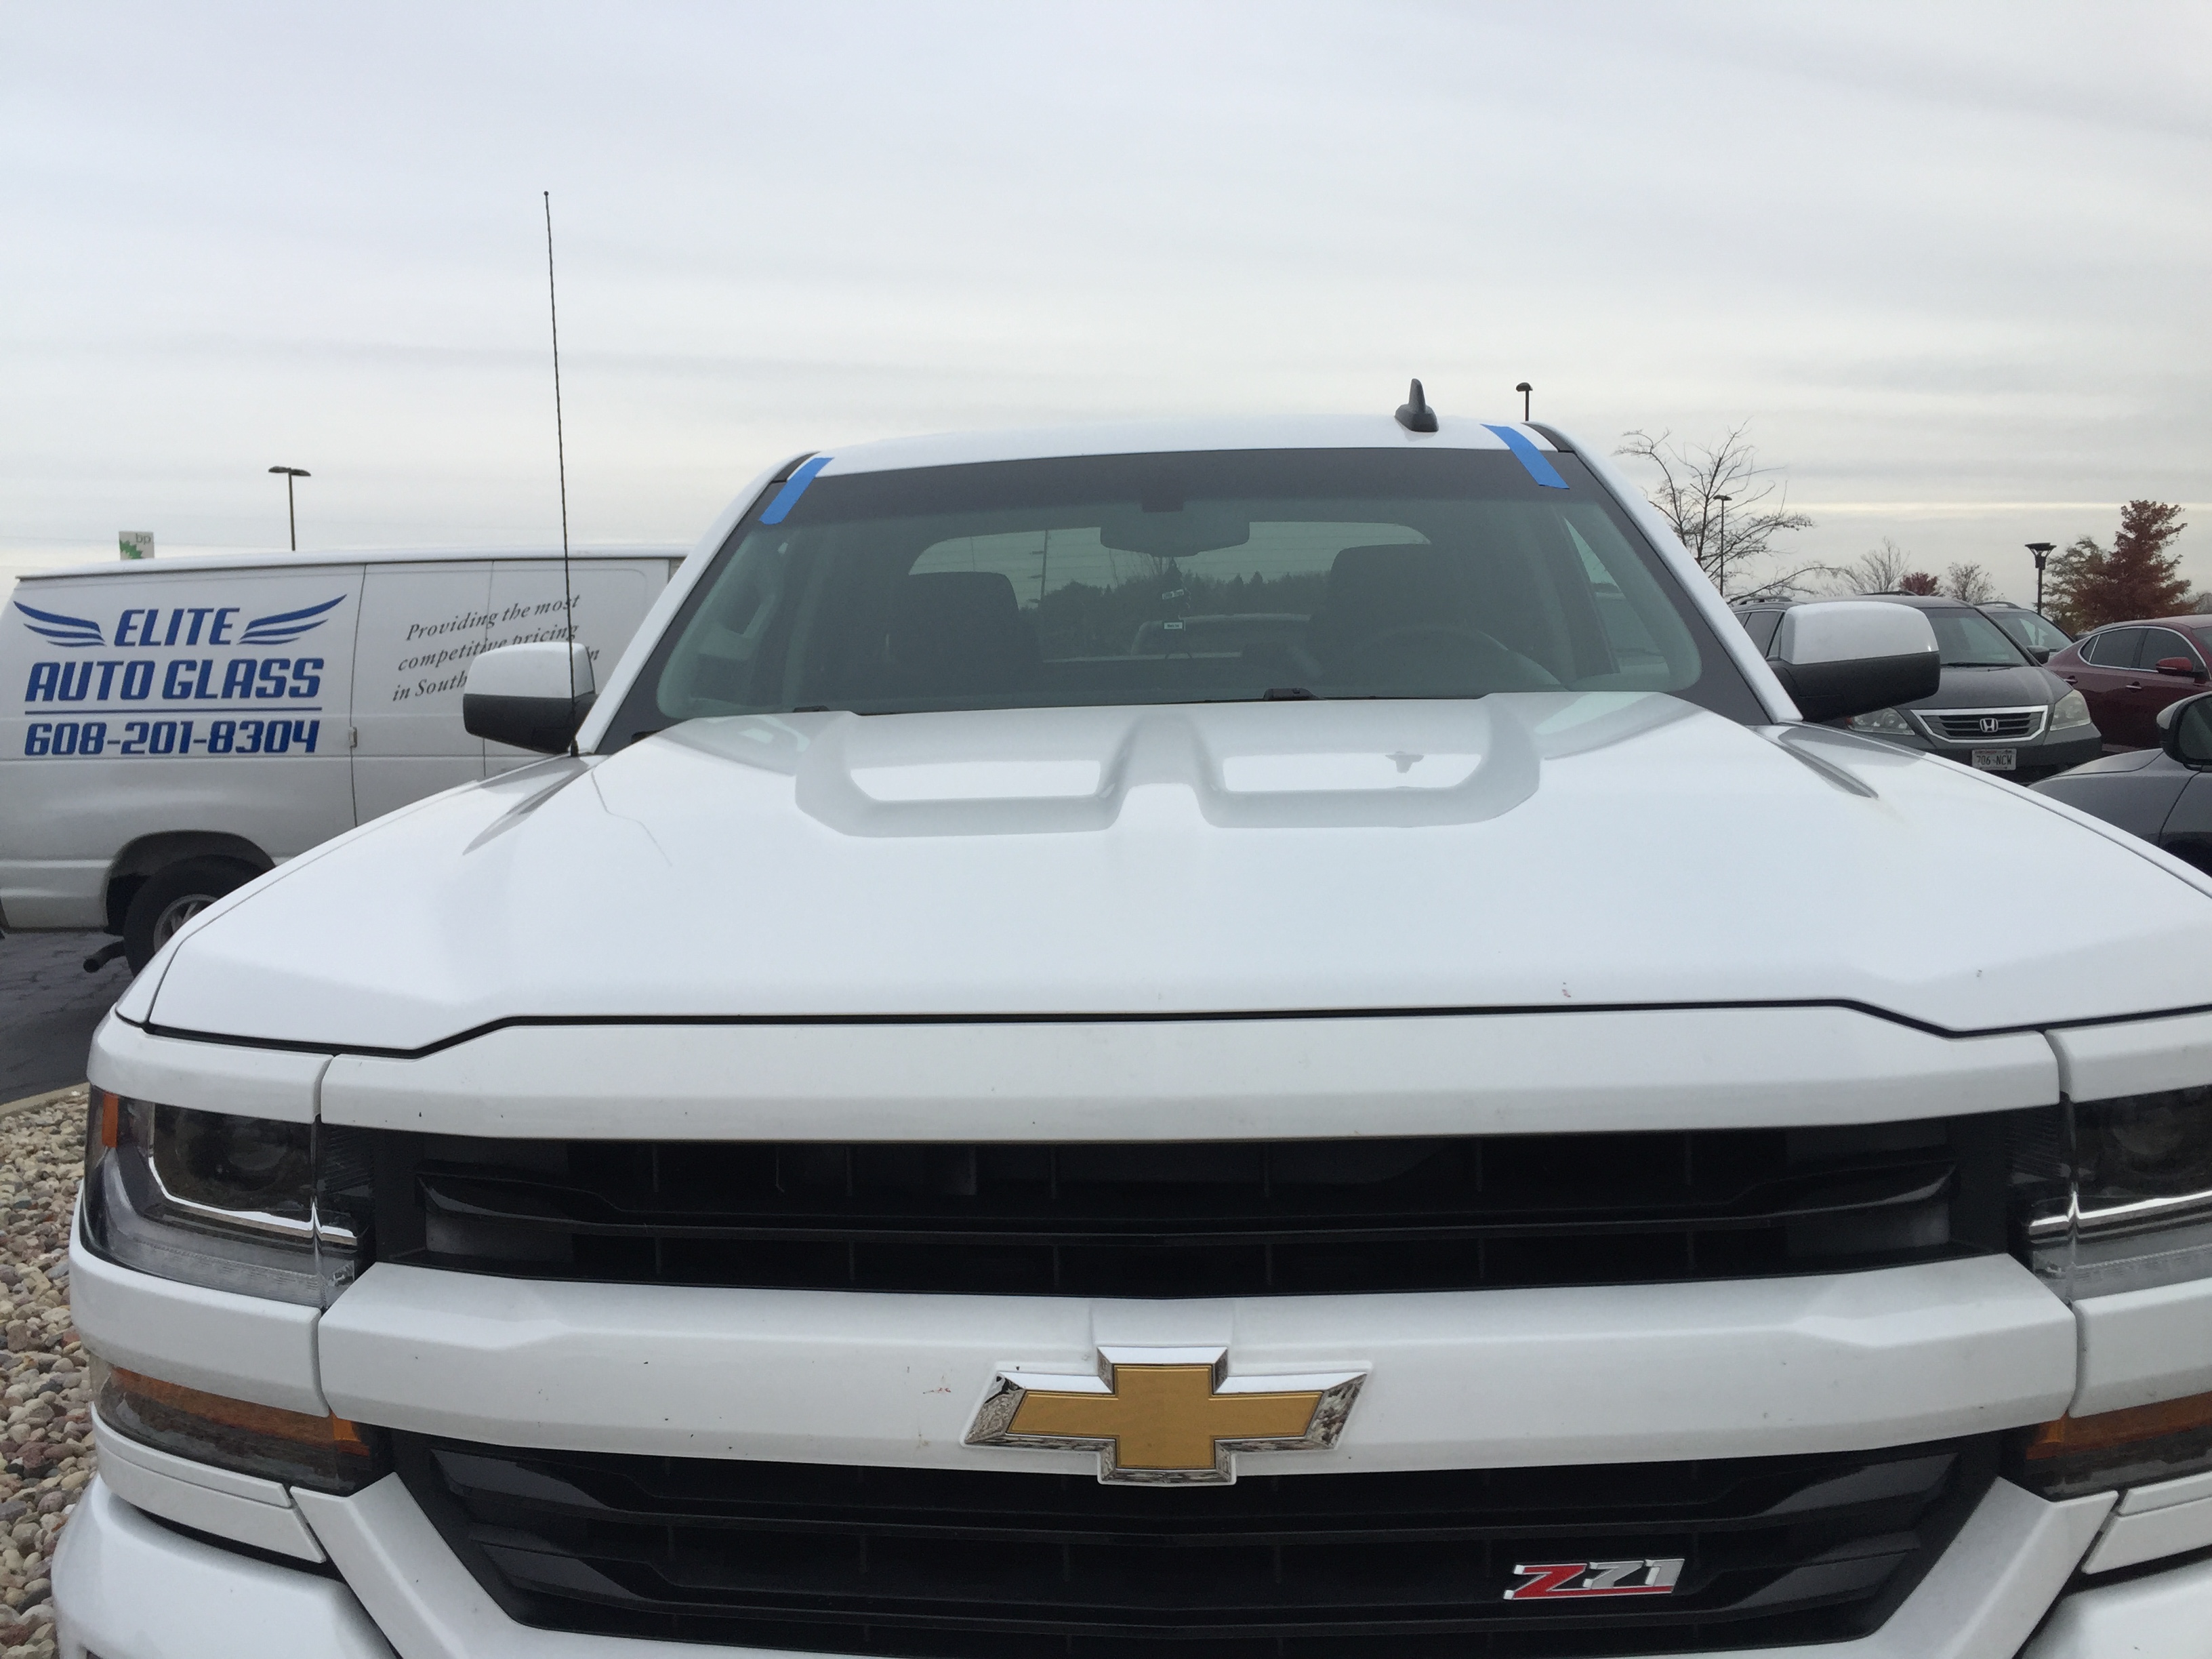 2016 Chevy Silverado windshield replacement